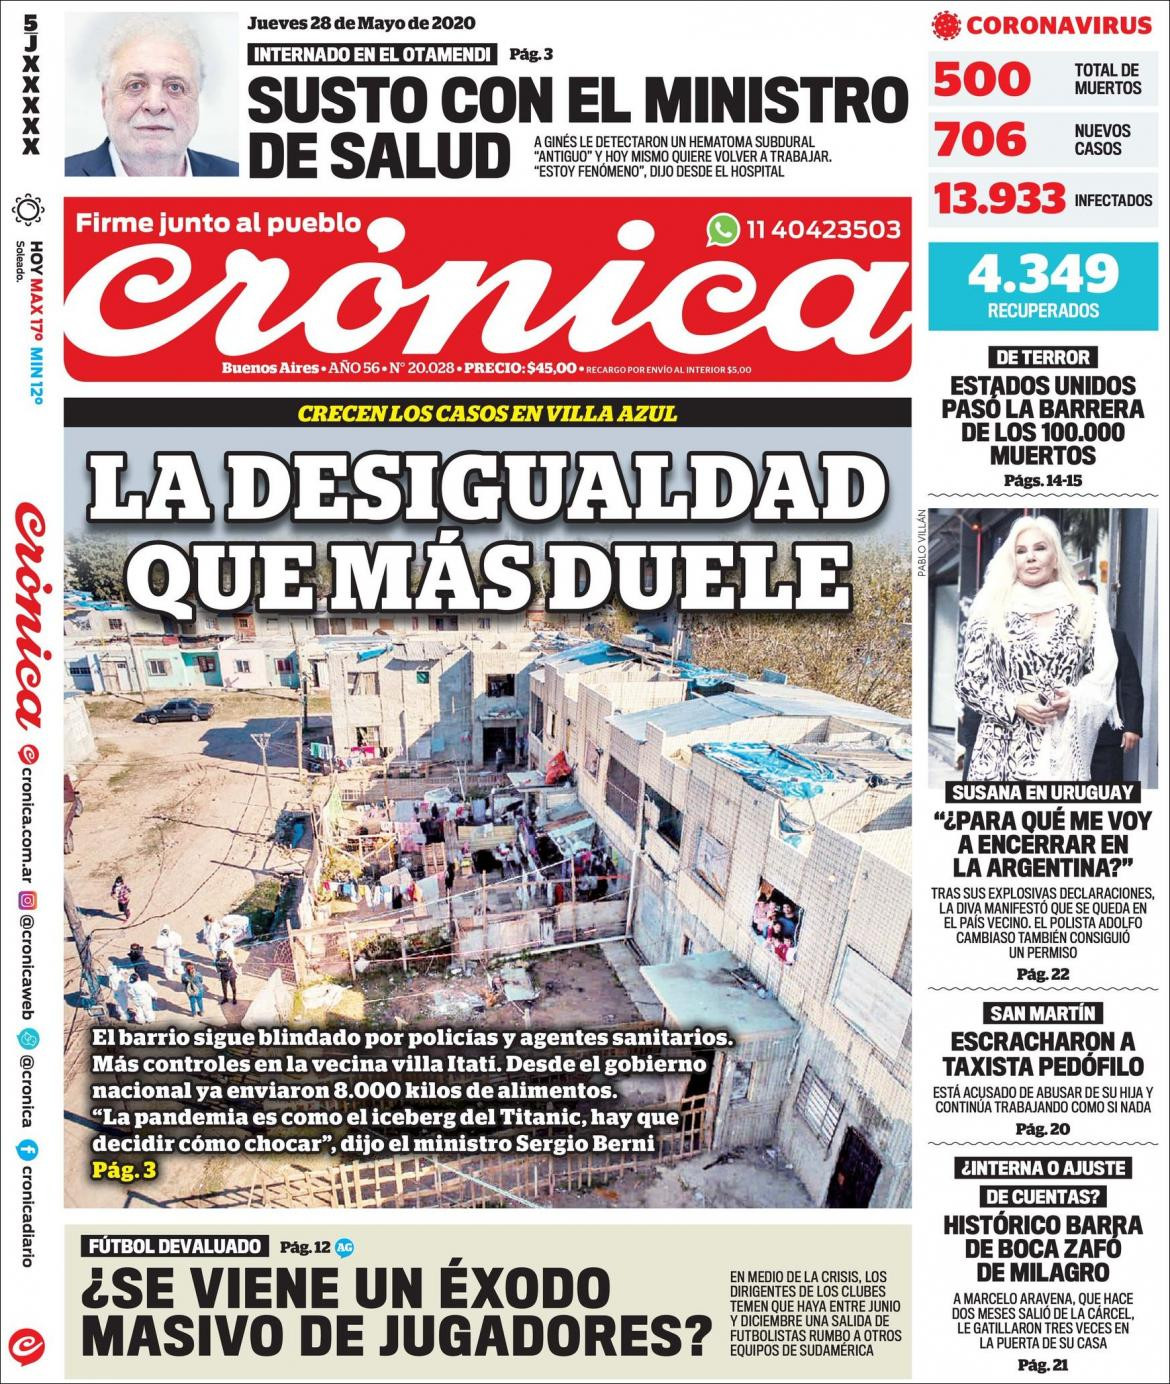 Tapas de diarios, Crónica, jueves 28 de mayo de 2020